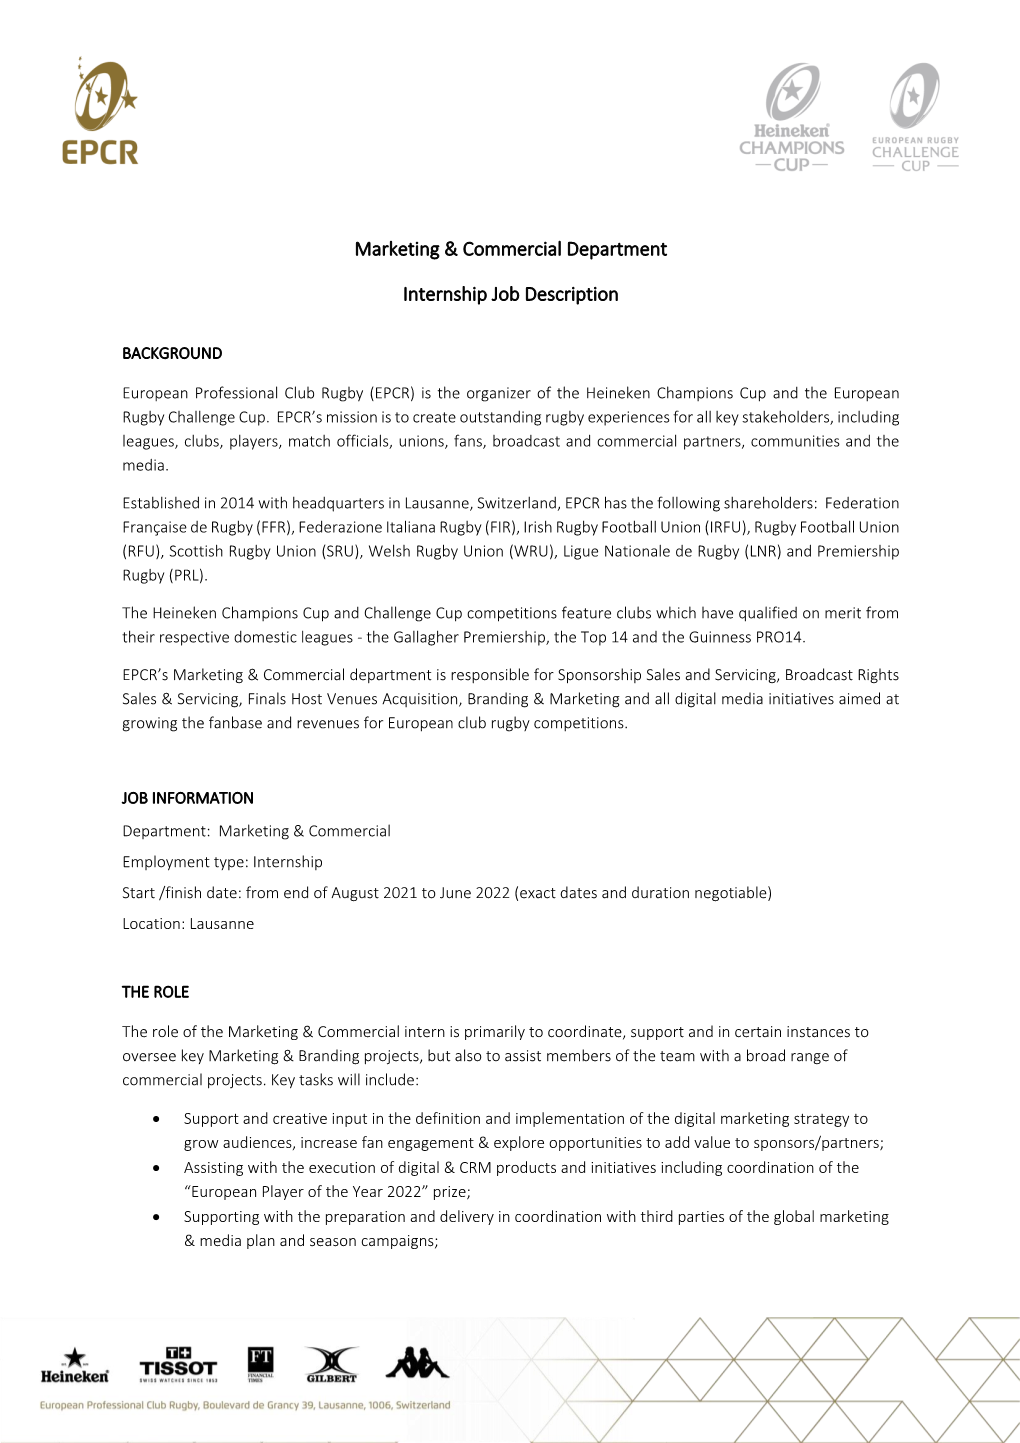 Marketing & Commercial Department Internship Job Description